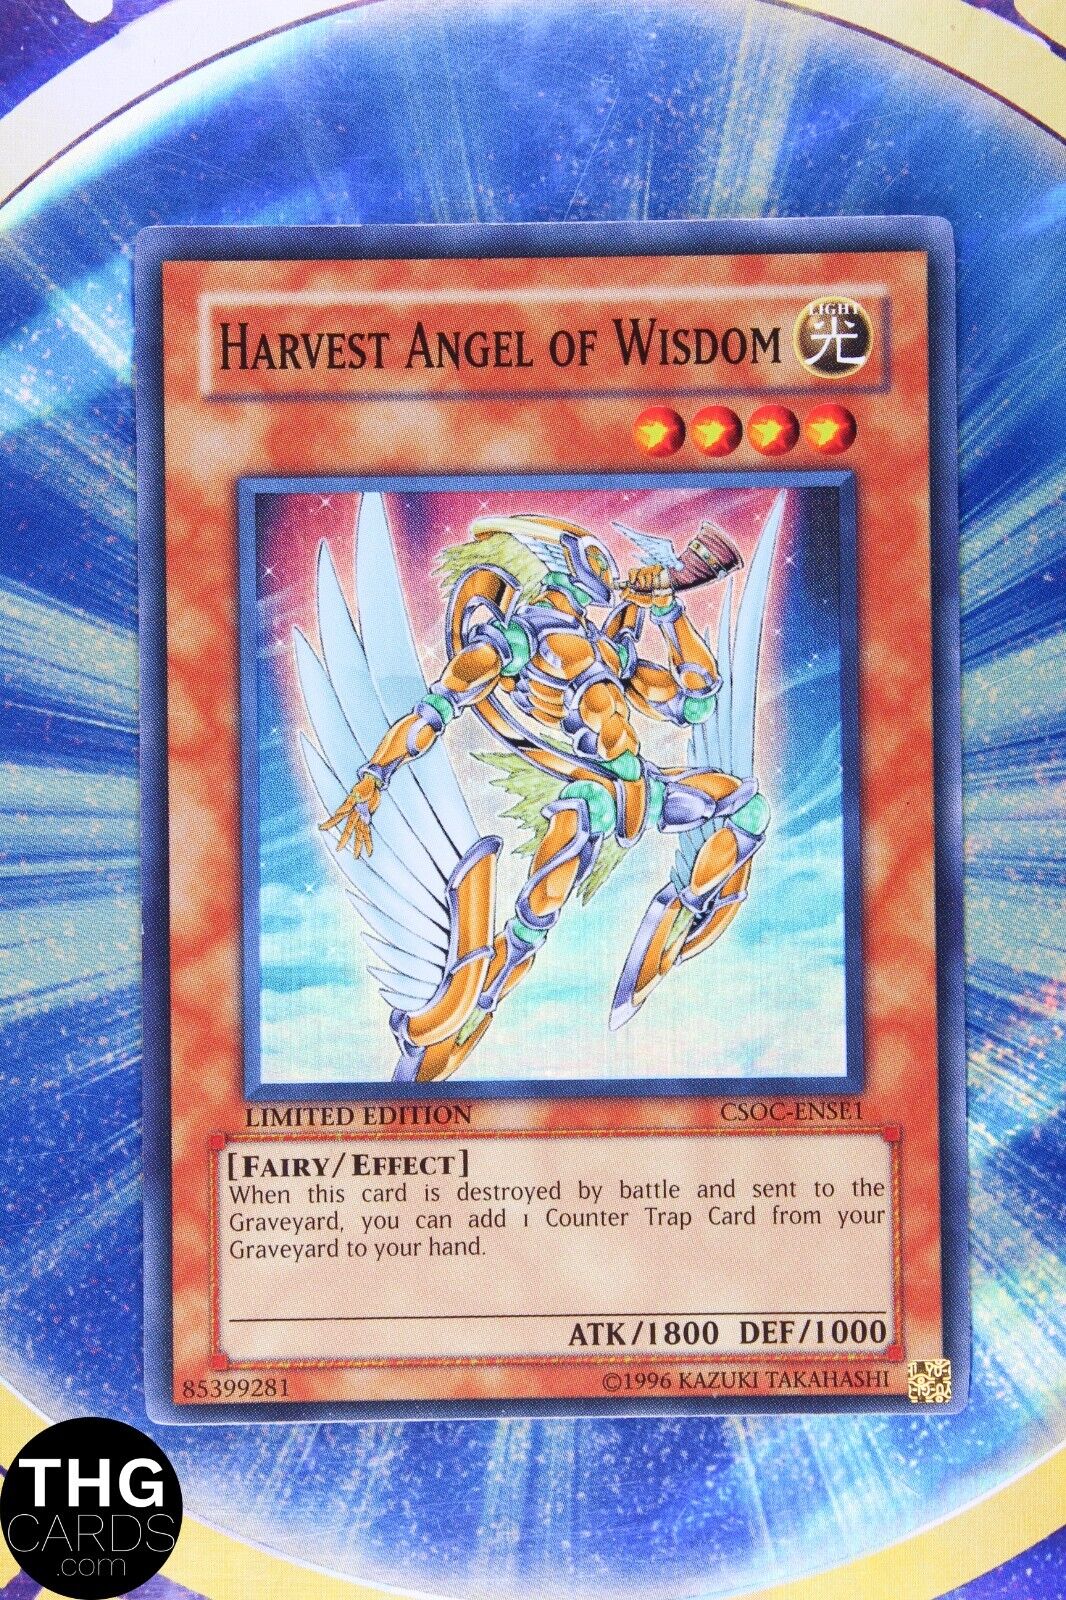 Harvest Angel of Wisdom CSOC-ENSE1 Super Rare Yugioh Card